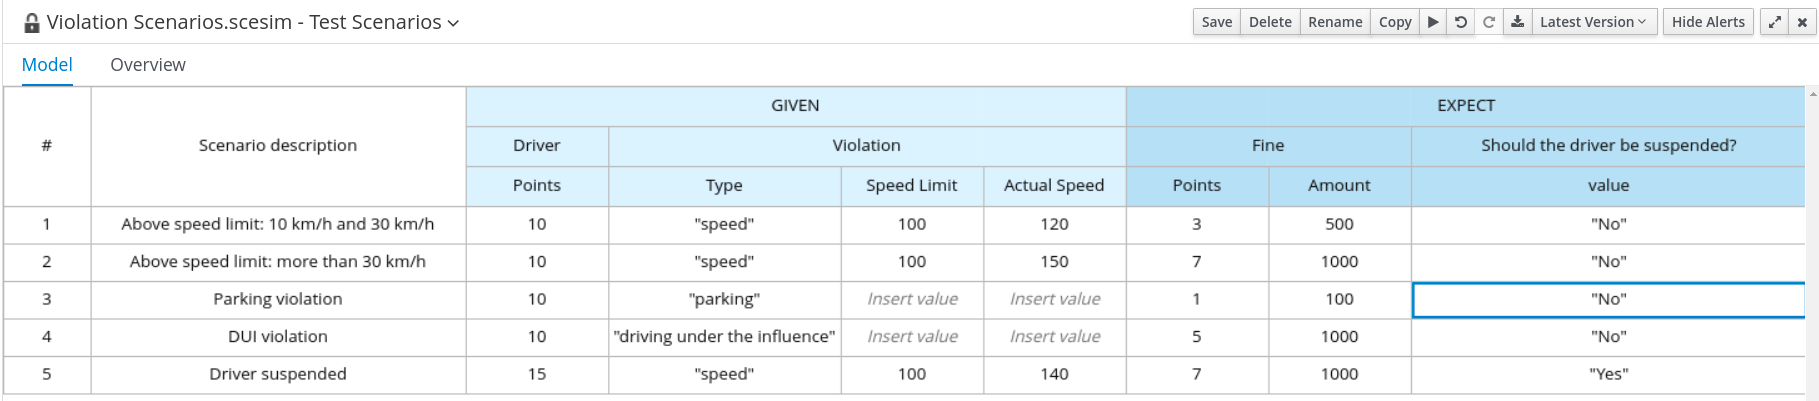 dmn gs traffic violation test scenarios